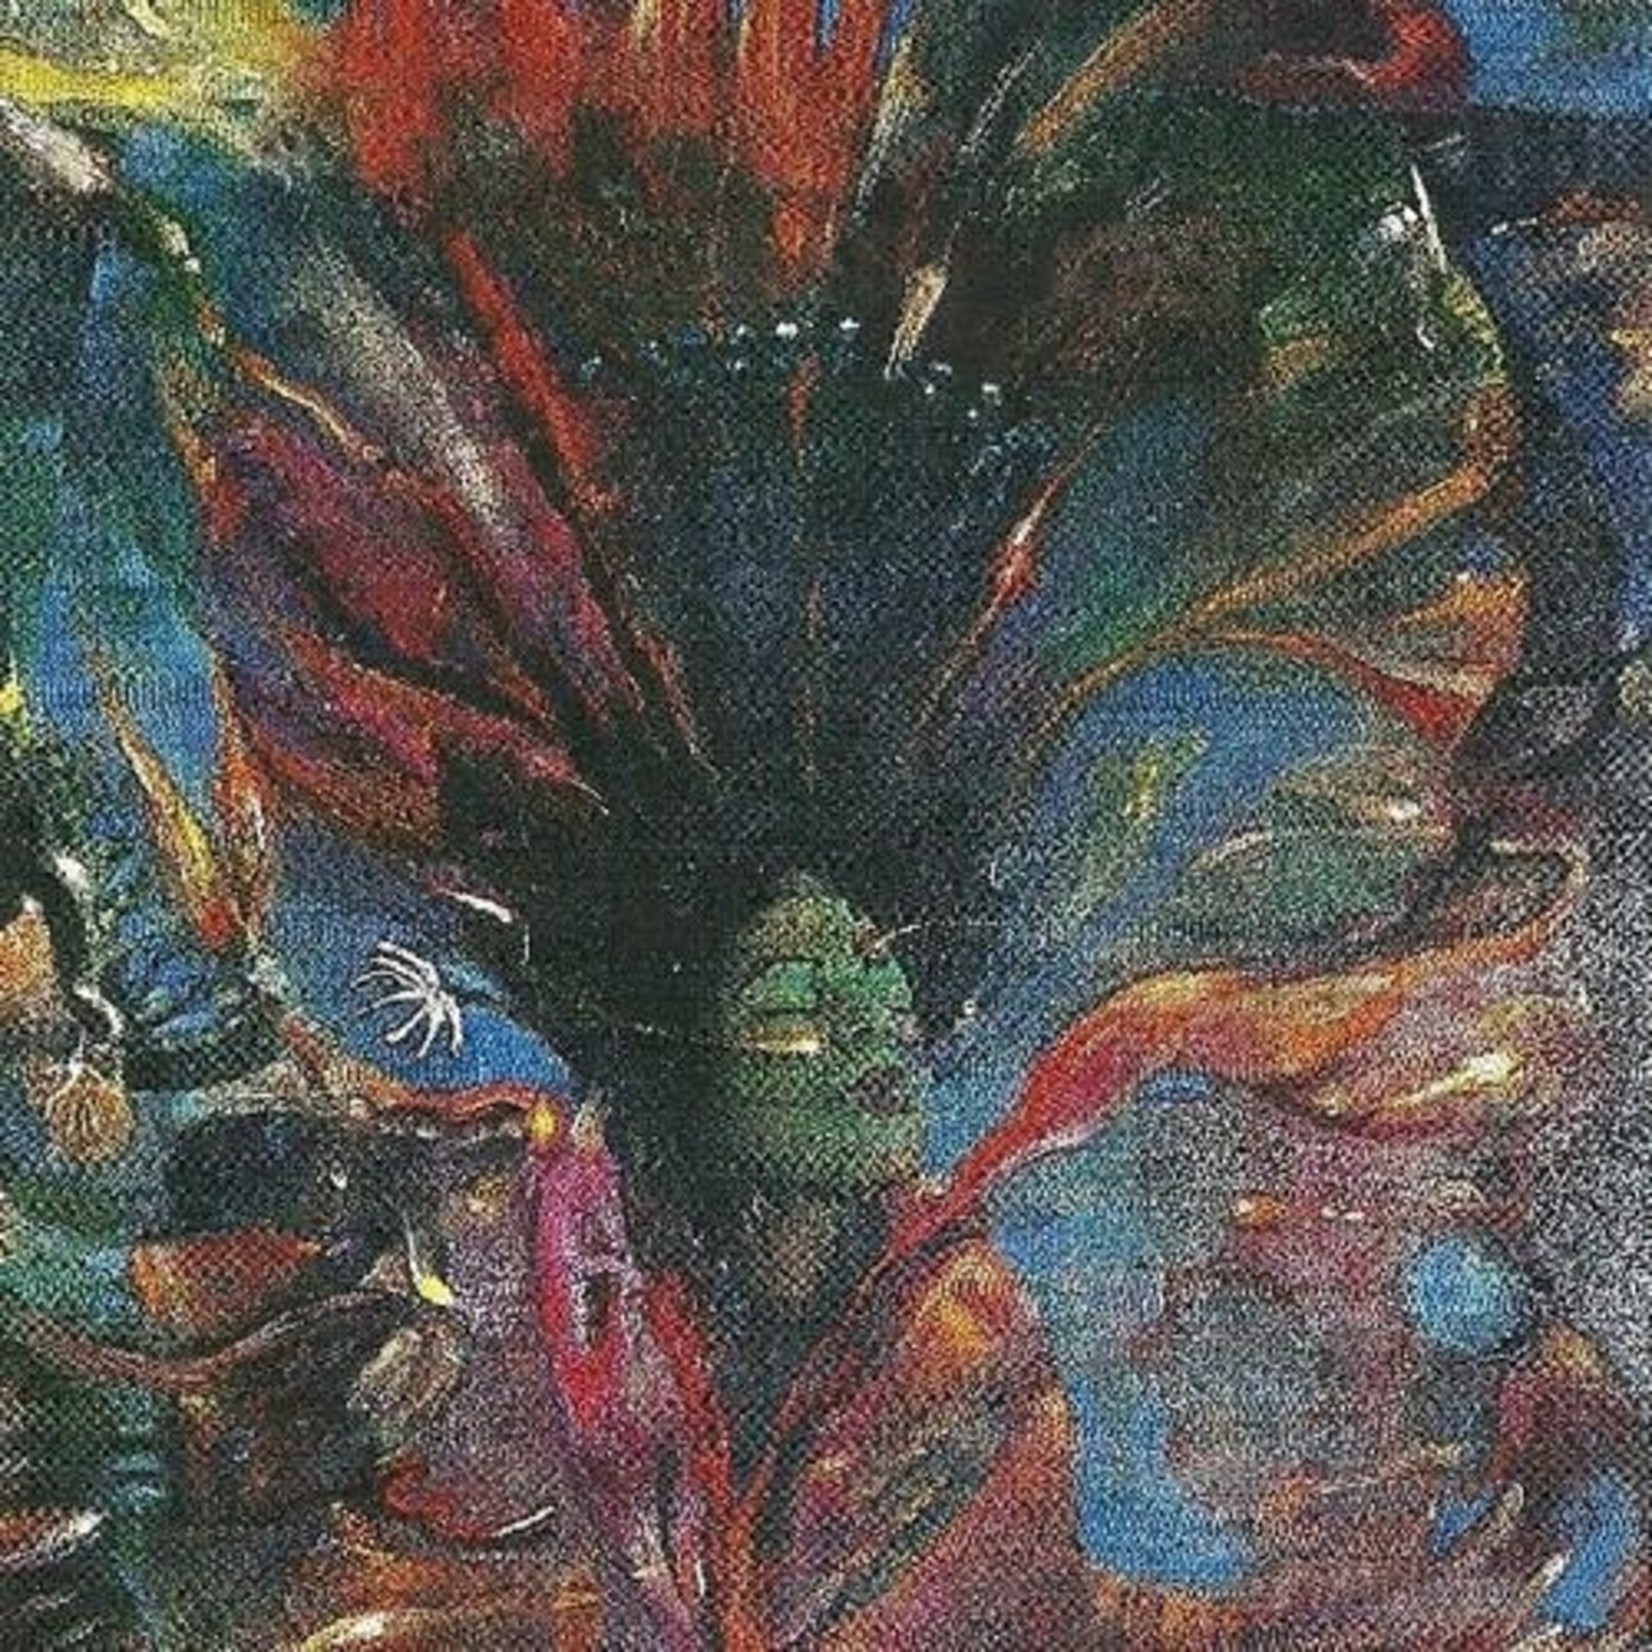 Strut Byard Lancaster - My Pure Joy (LP)